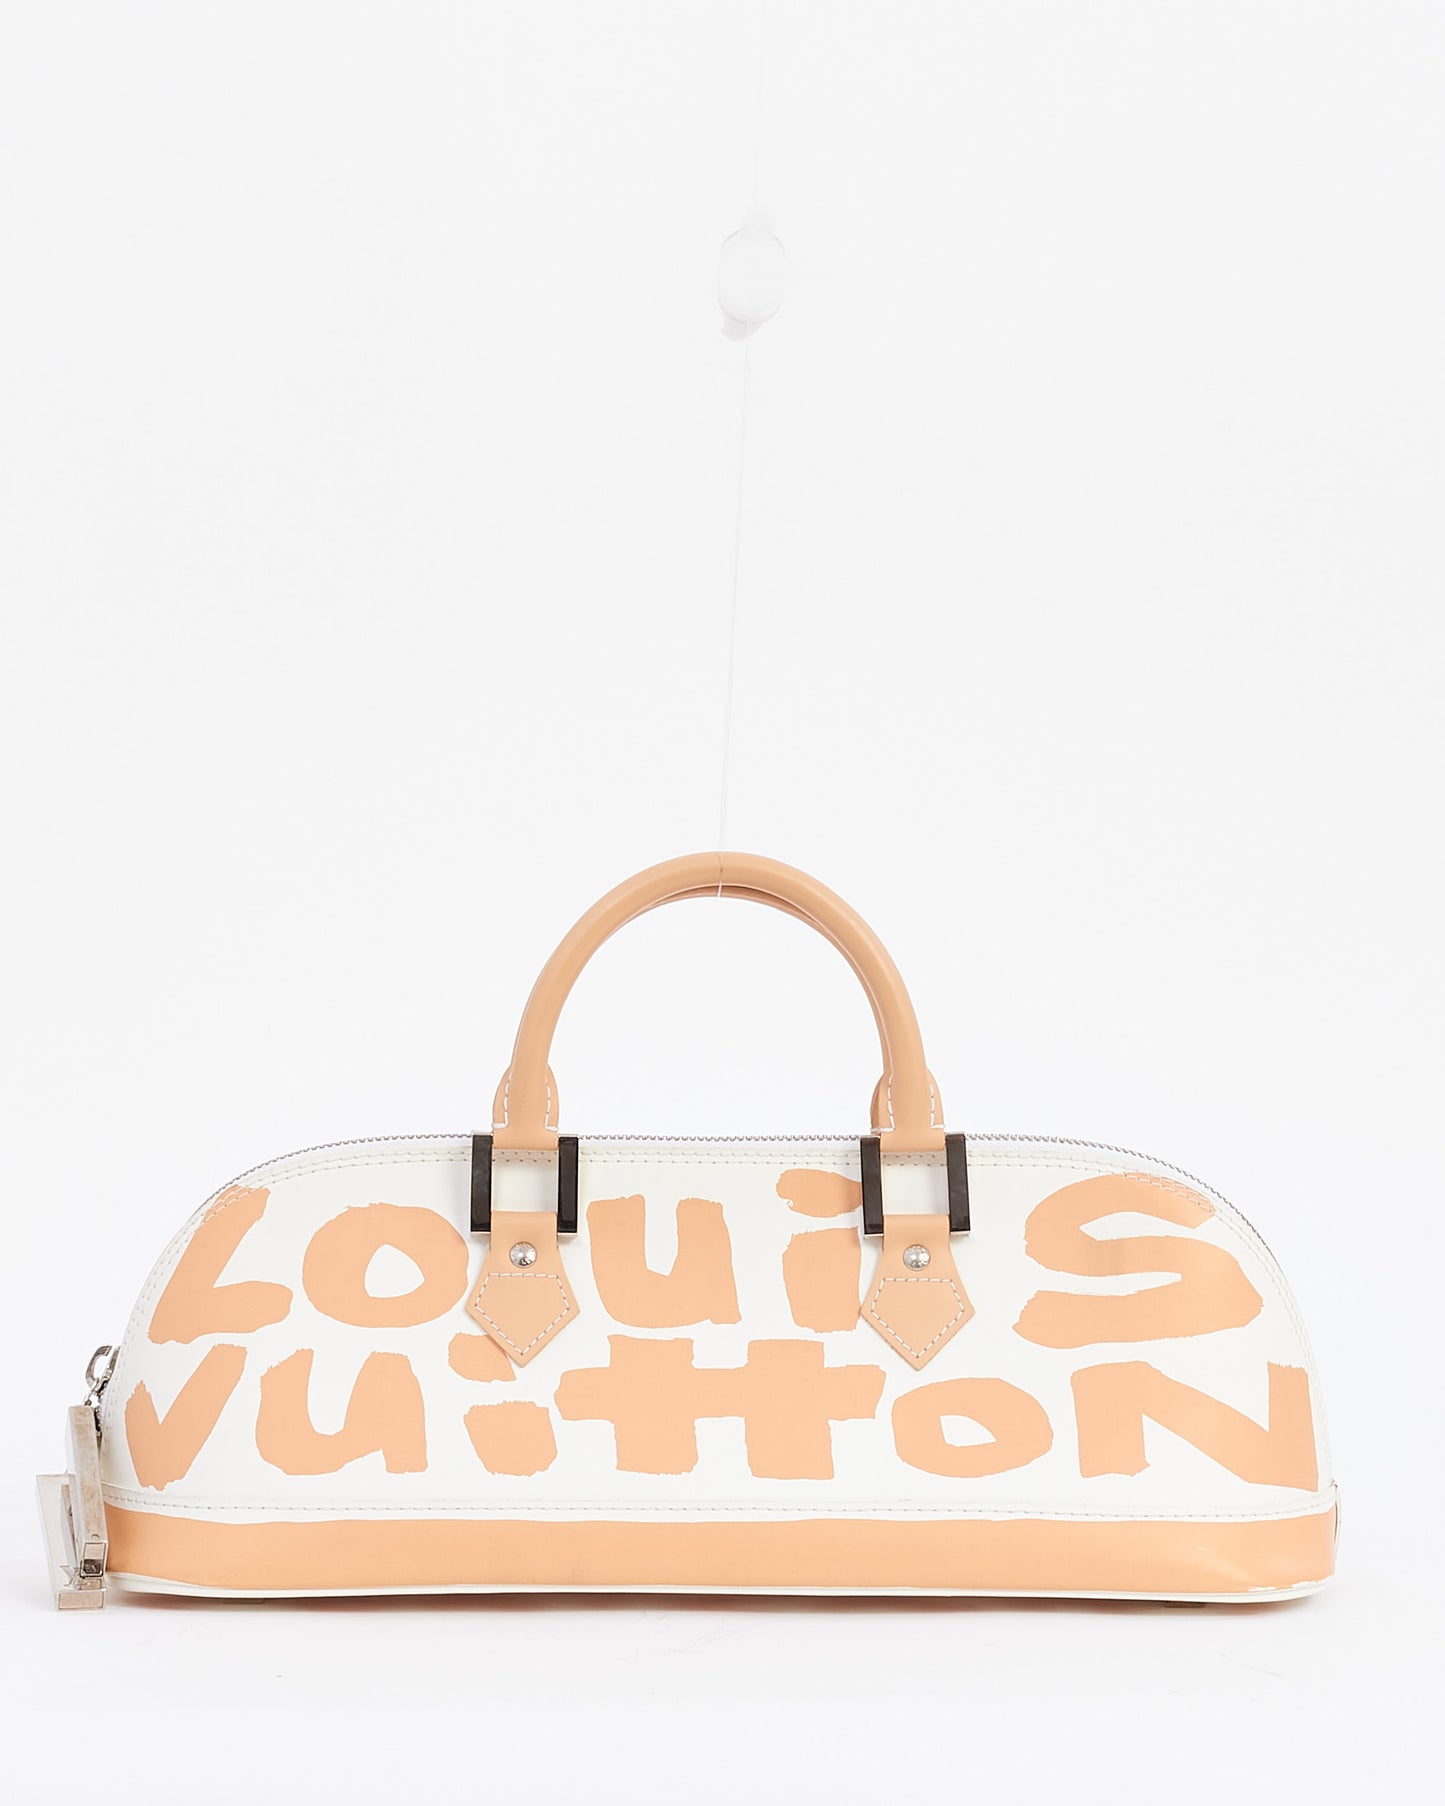 Louis Vuitton Beige/Crème Stephen Sprouse Horizontal Graffiti Alma Sac